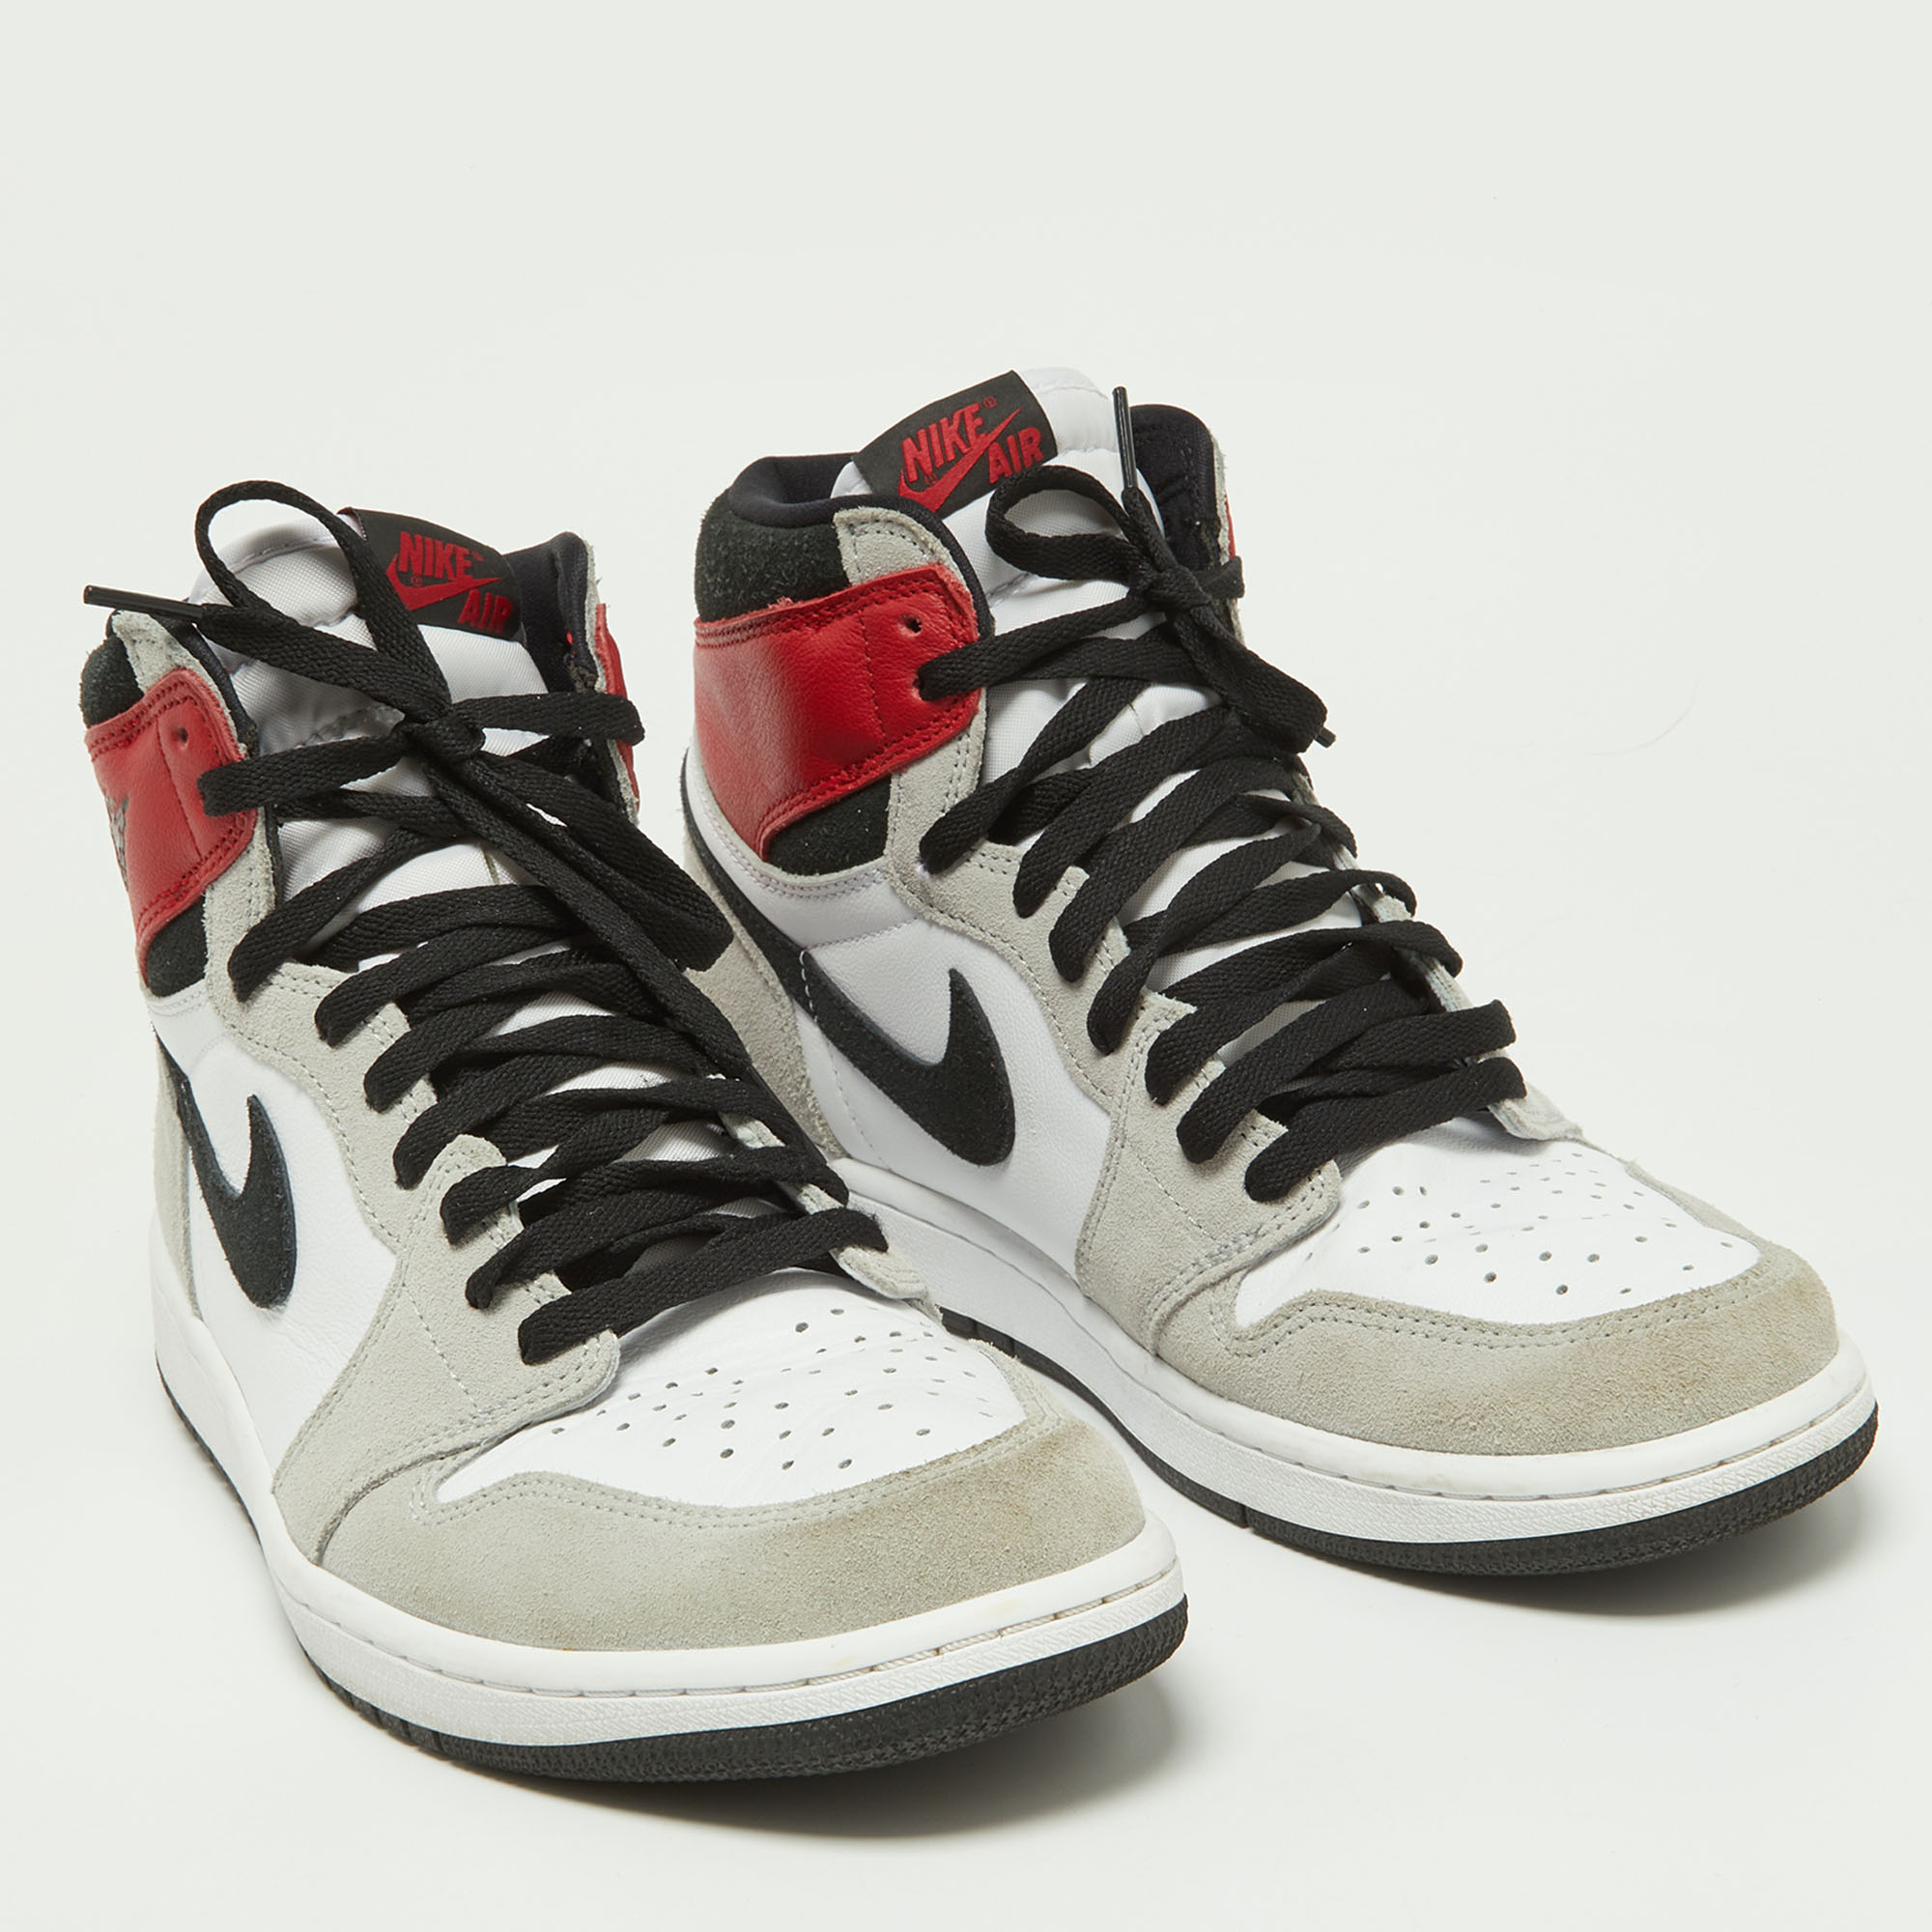 Air Jordan Tricolor Leather And Suede Jordan1 High Light Smoke Grey Sneakers Size 46